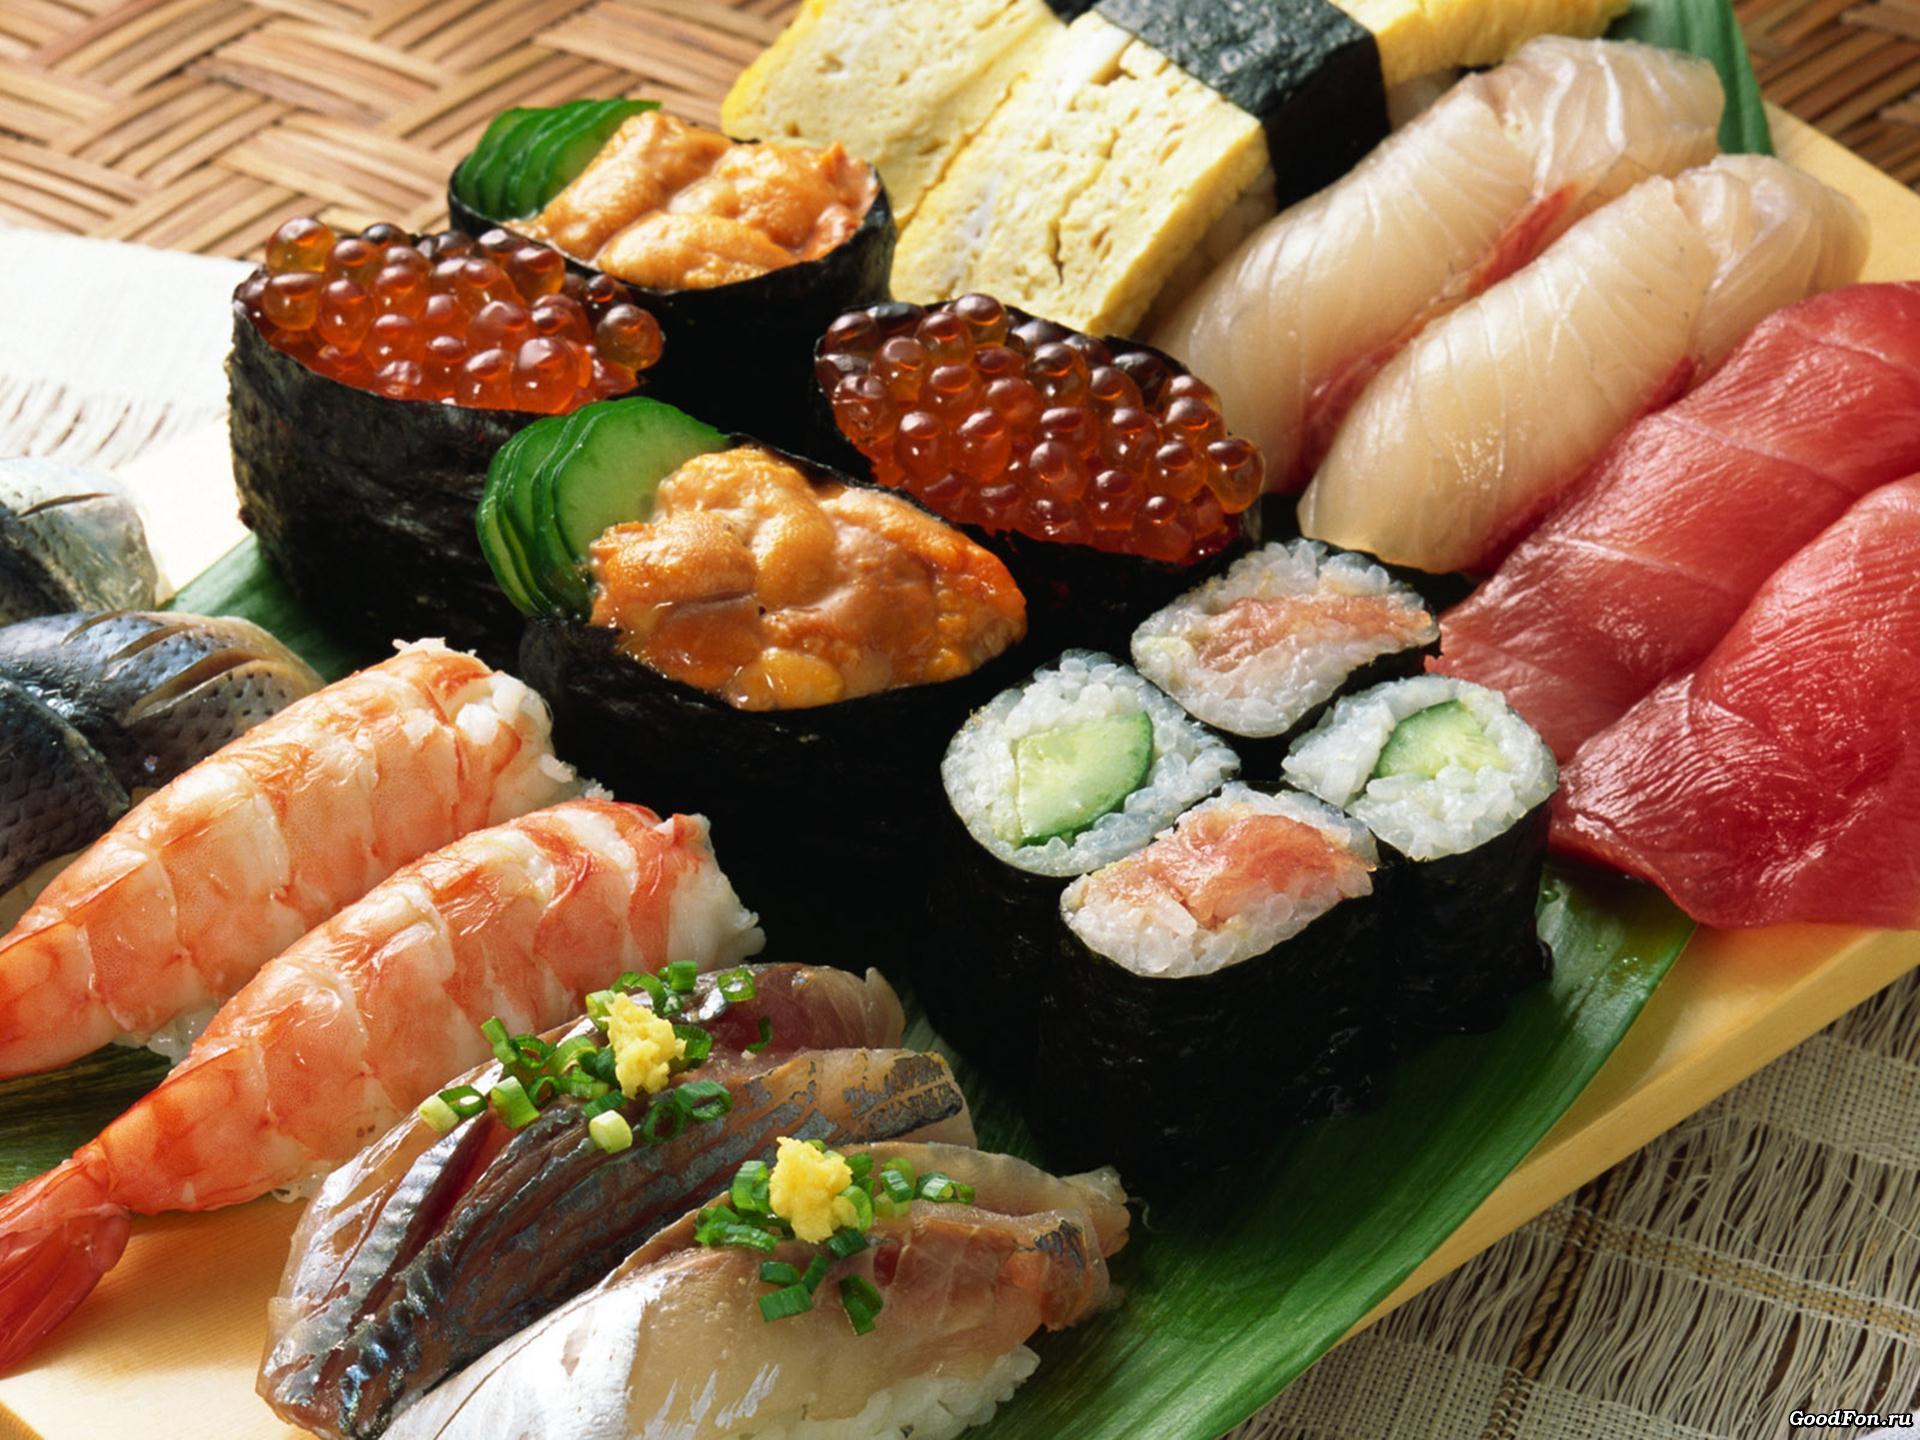 еда рыба суши роллы япония японская кухня food fish sushi rolls Japan Japanese kitchen без смс